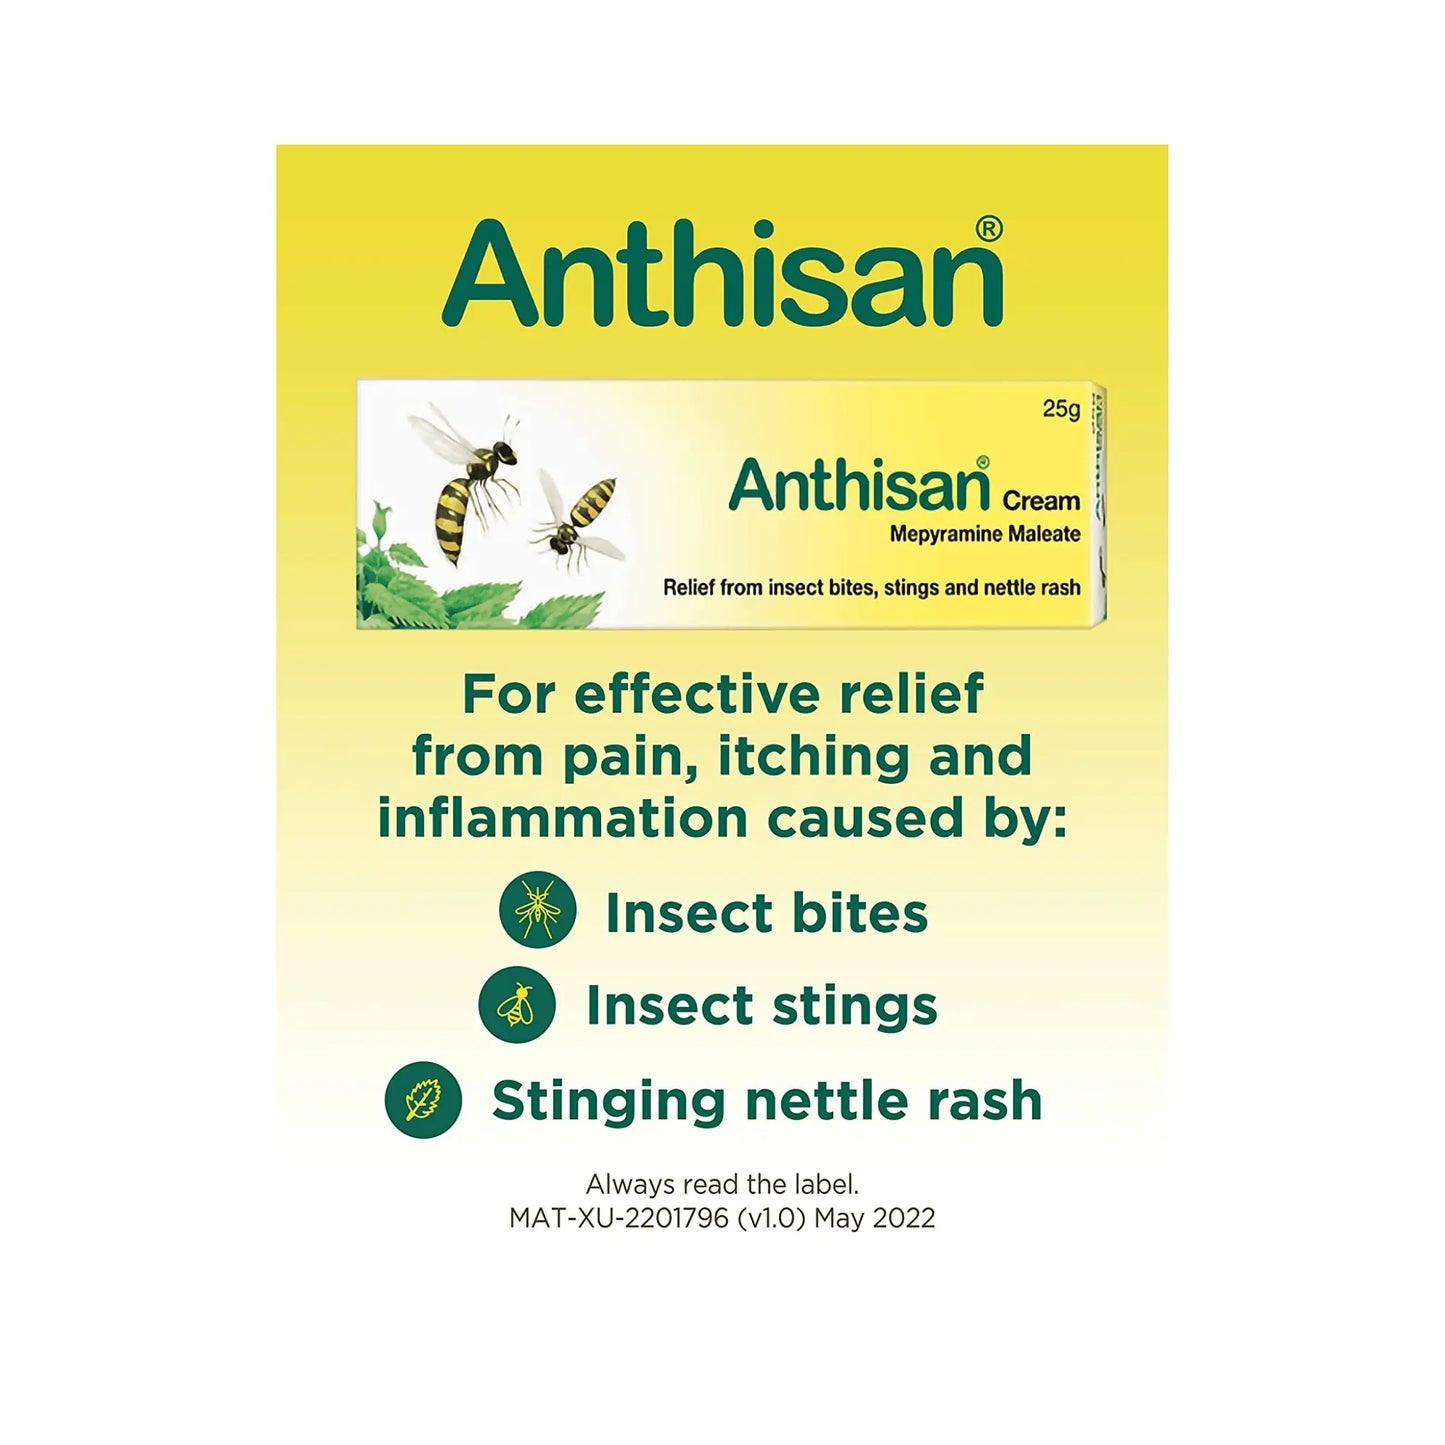 Anthisan Bite & Sting 20g Cream - Arc Health Nutrition UK Ltd 